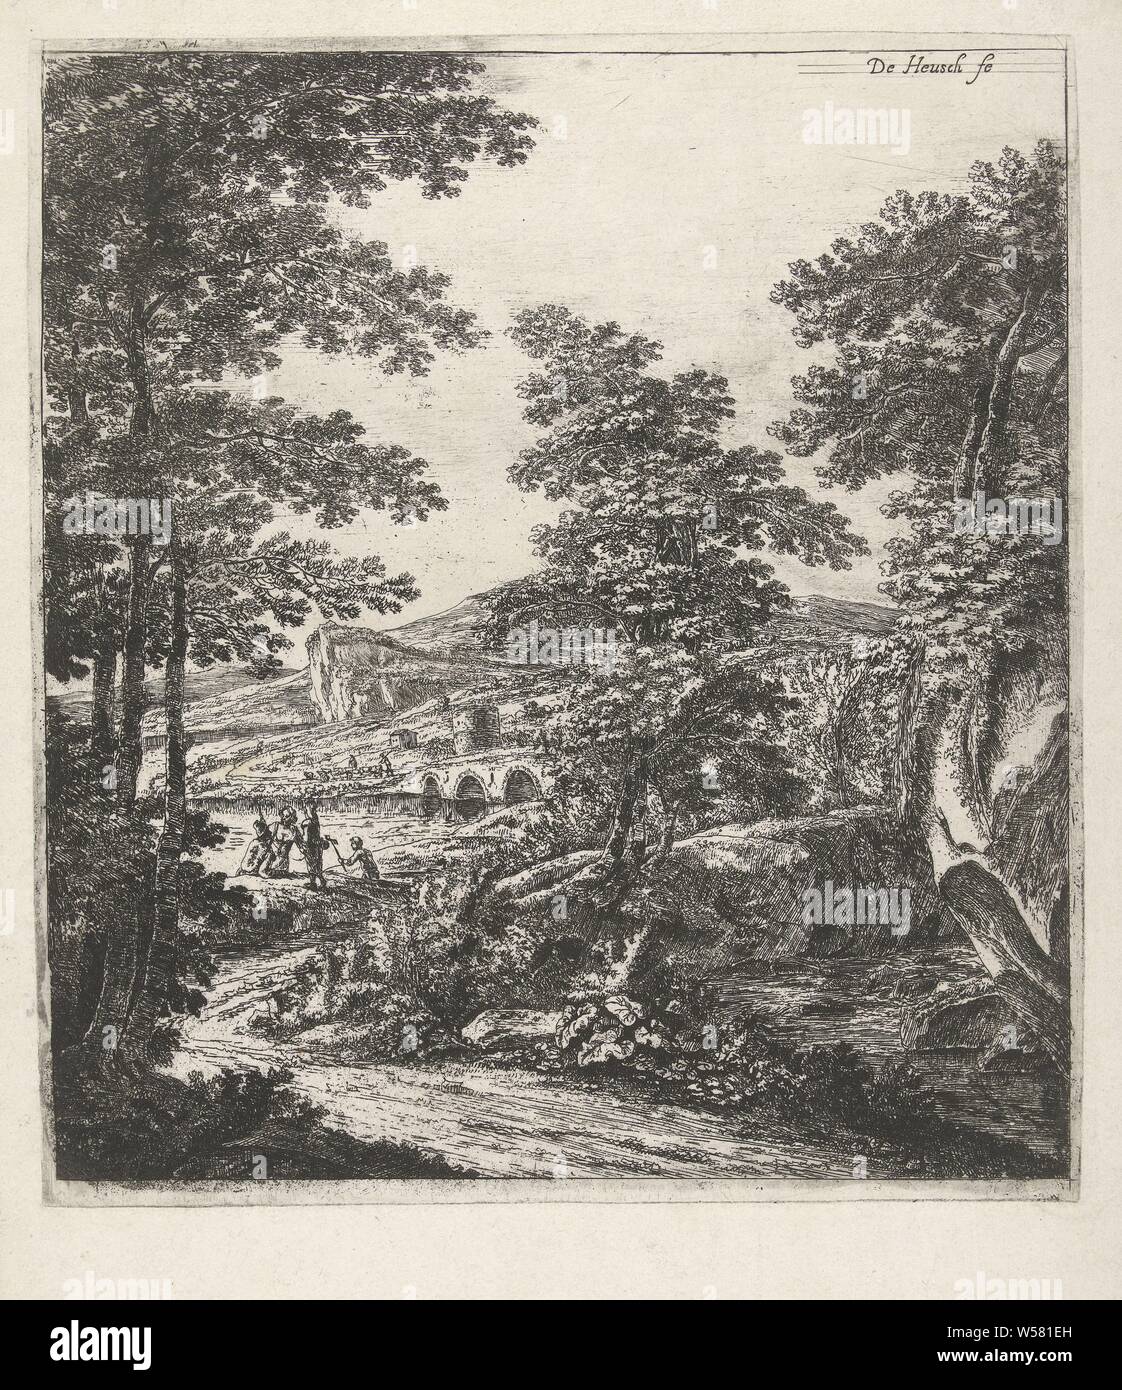 Landscape with a stone bridge, Landscapes (series title), Willem de Heusch (mentioned on object), Utrecht, c. 1635 - 1692, paper, etching, h 261 mm × w 235 mm Stock Photo